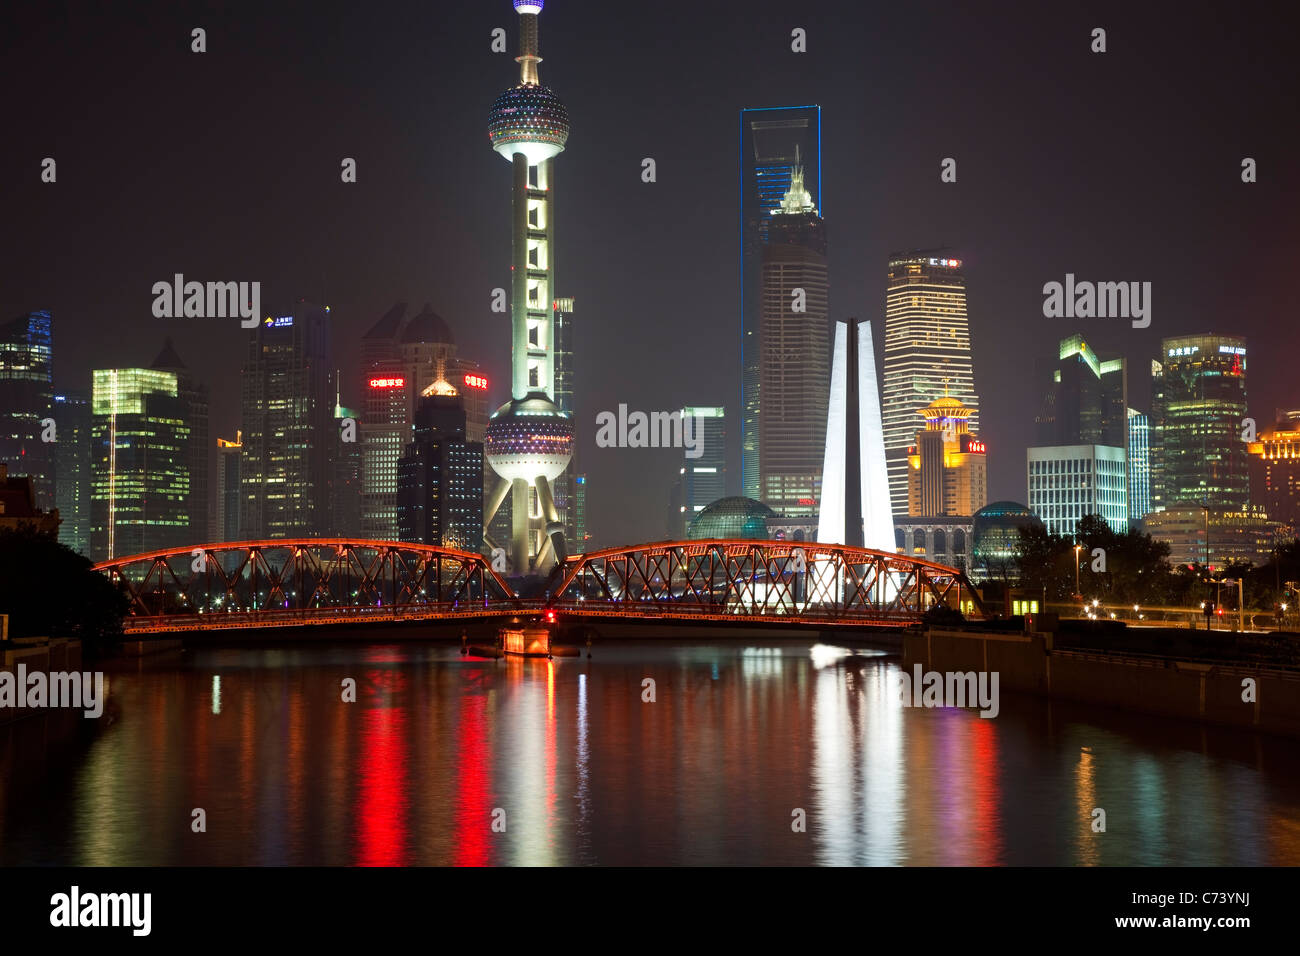 New Pudong skyline Waibaidu (Garden) Bridge looking across the Huangpu River from the Bund Shanghai China Stock Photo